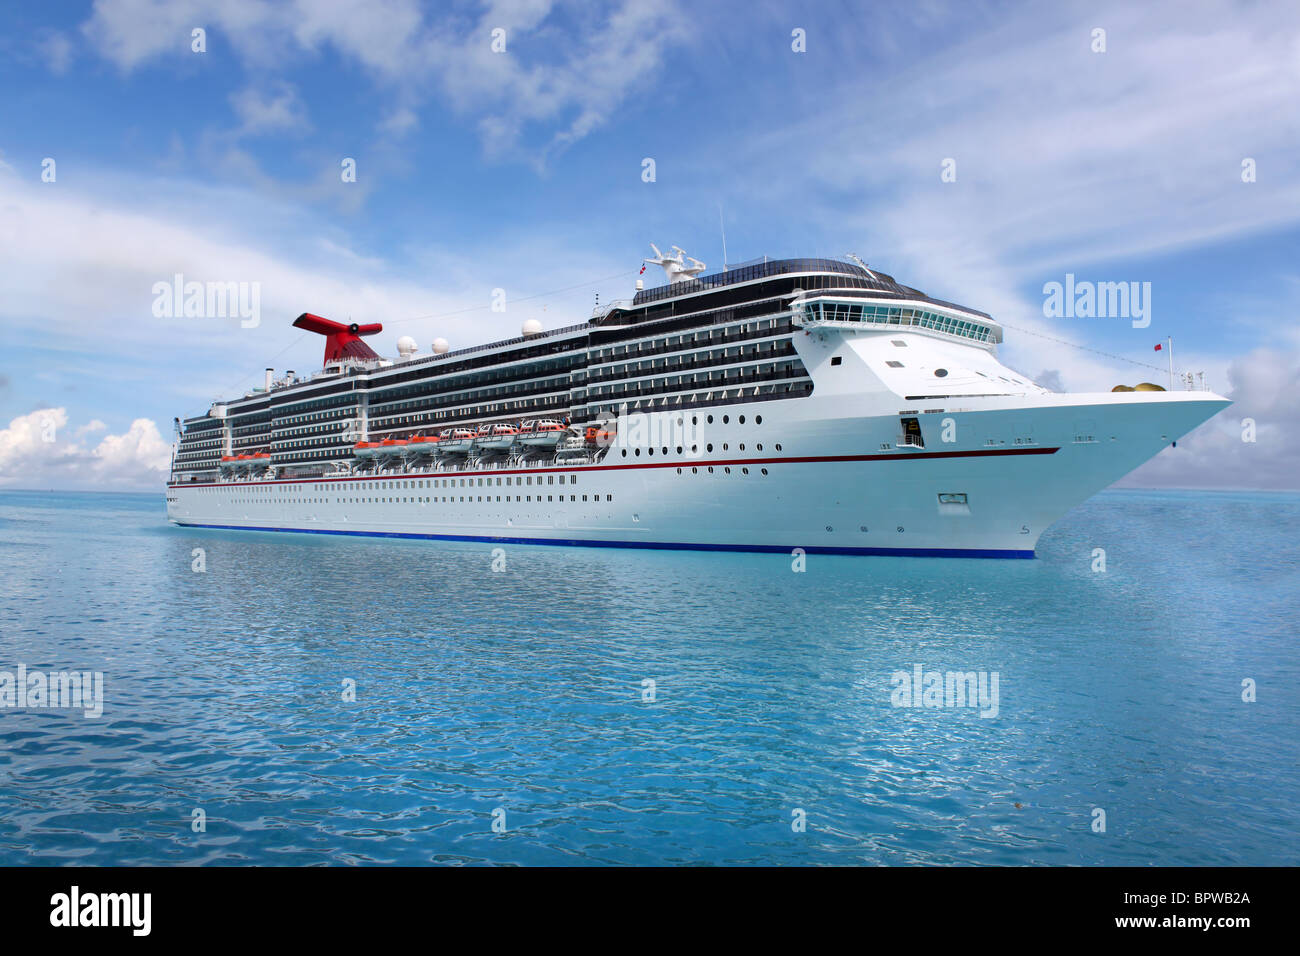 Cruise ship in Caribbean ocean Stock Photo